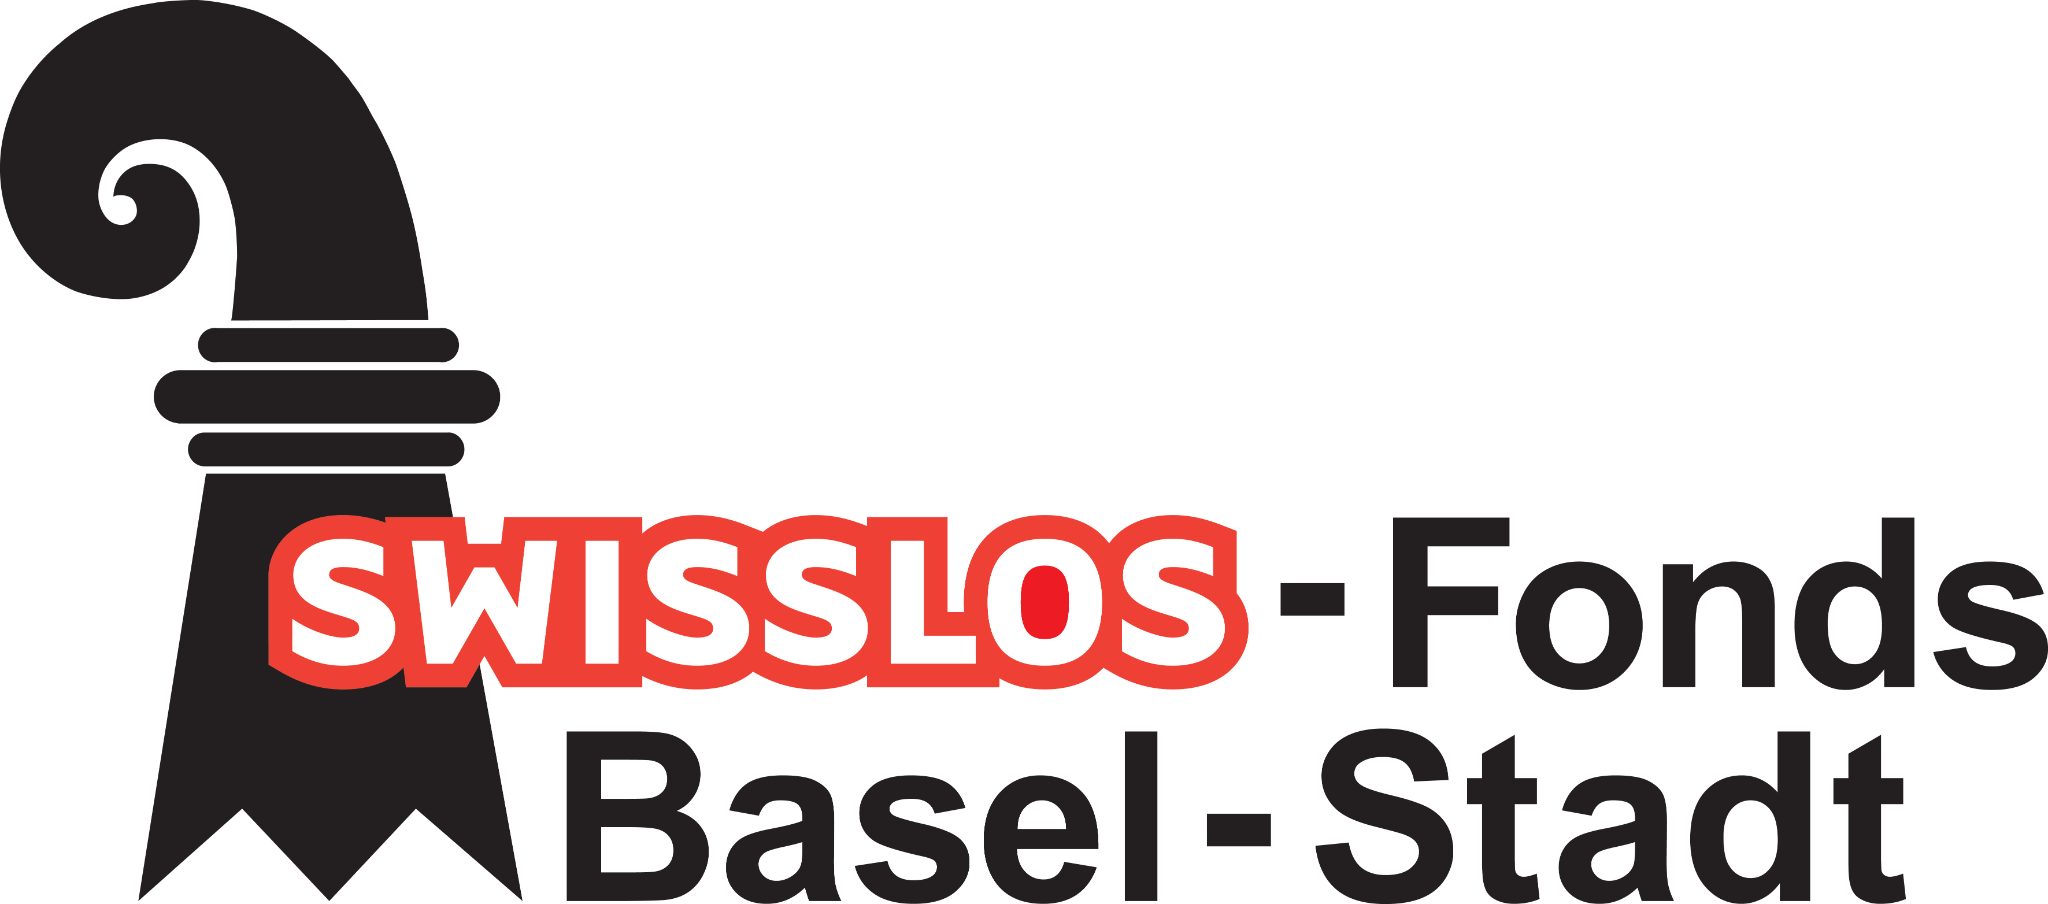 Swisslos-Fonds Basel-Stadt